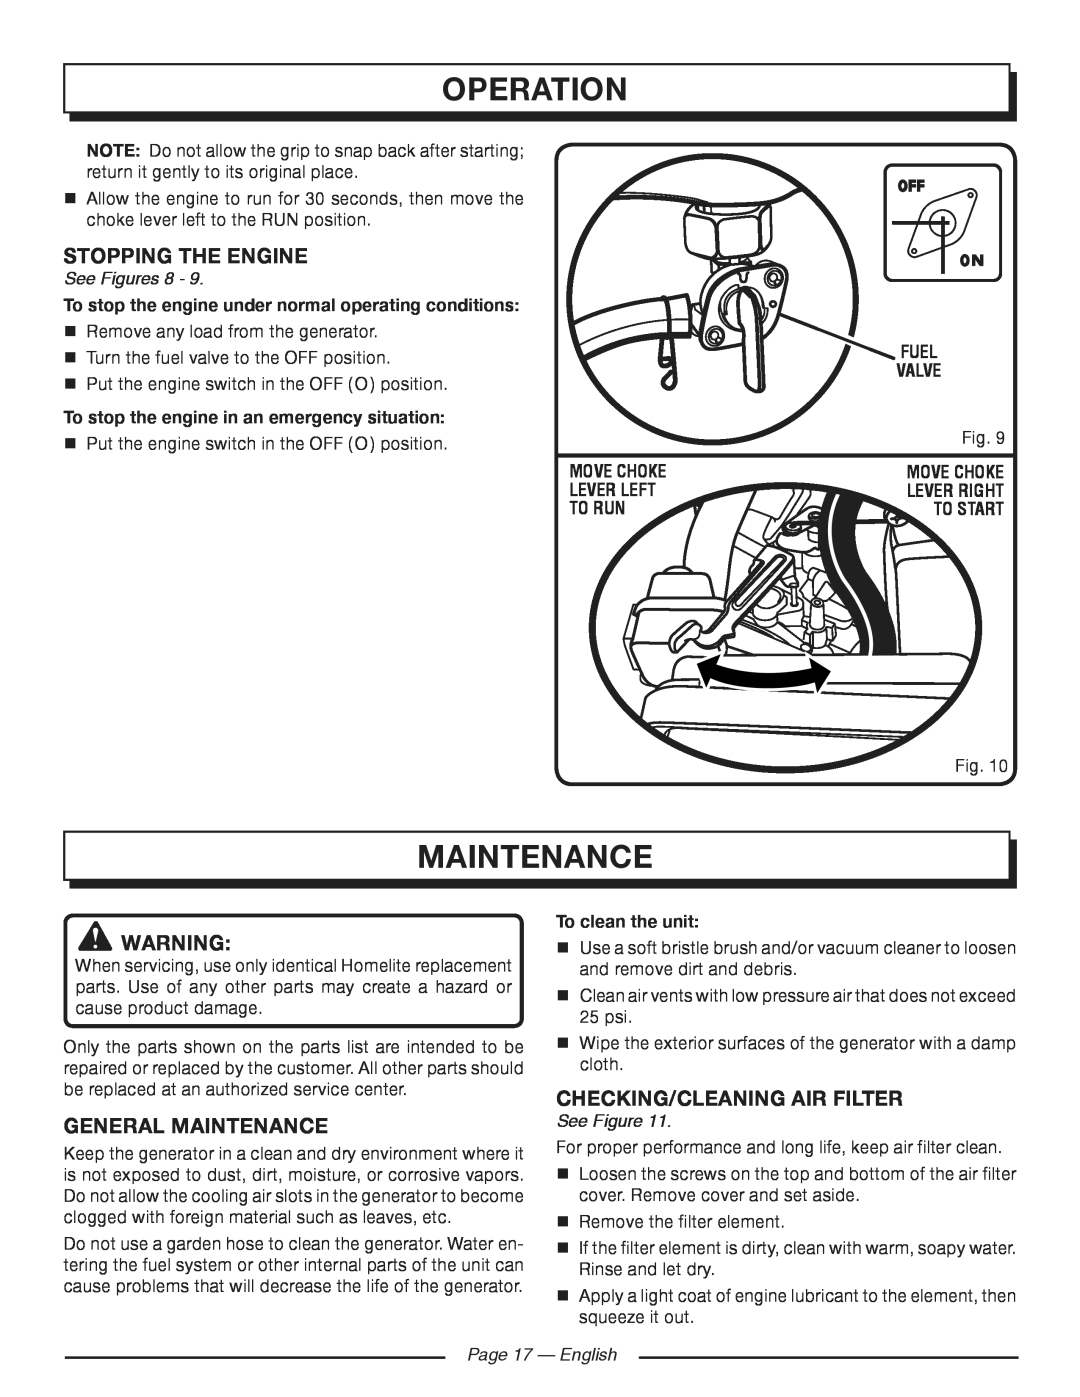 Homelite HG5700 manuel dutilisation maintenance, operation, See Figures, Page 17 - English 